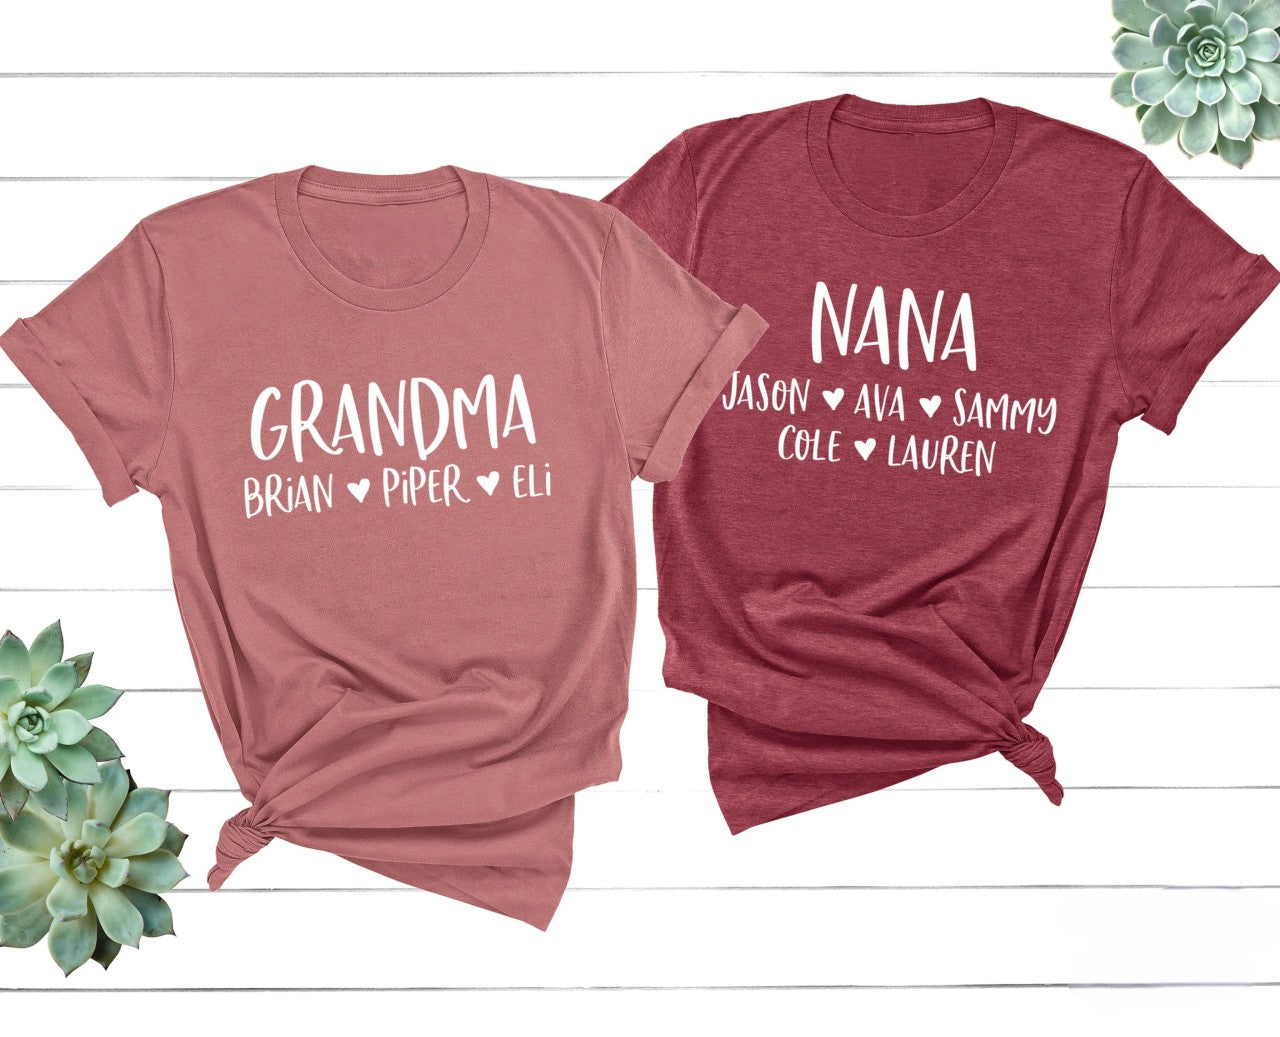 Personalized Grandma Shirt, Nana Shirt, Personalized Grandma Gift, Christmas Gift for Grandma, Customized Mother's Day Shirt, Grandchildren